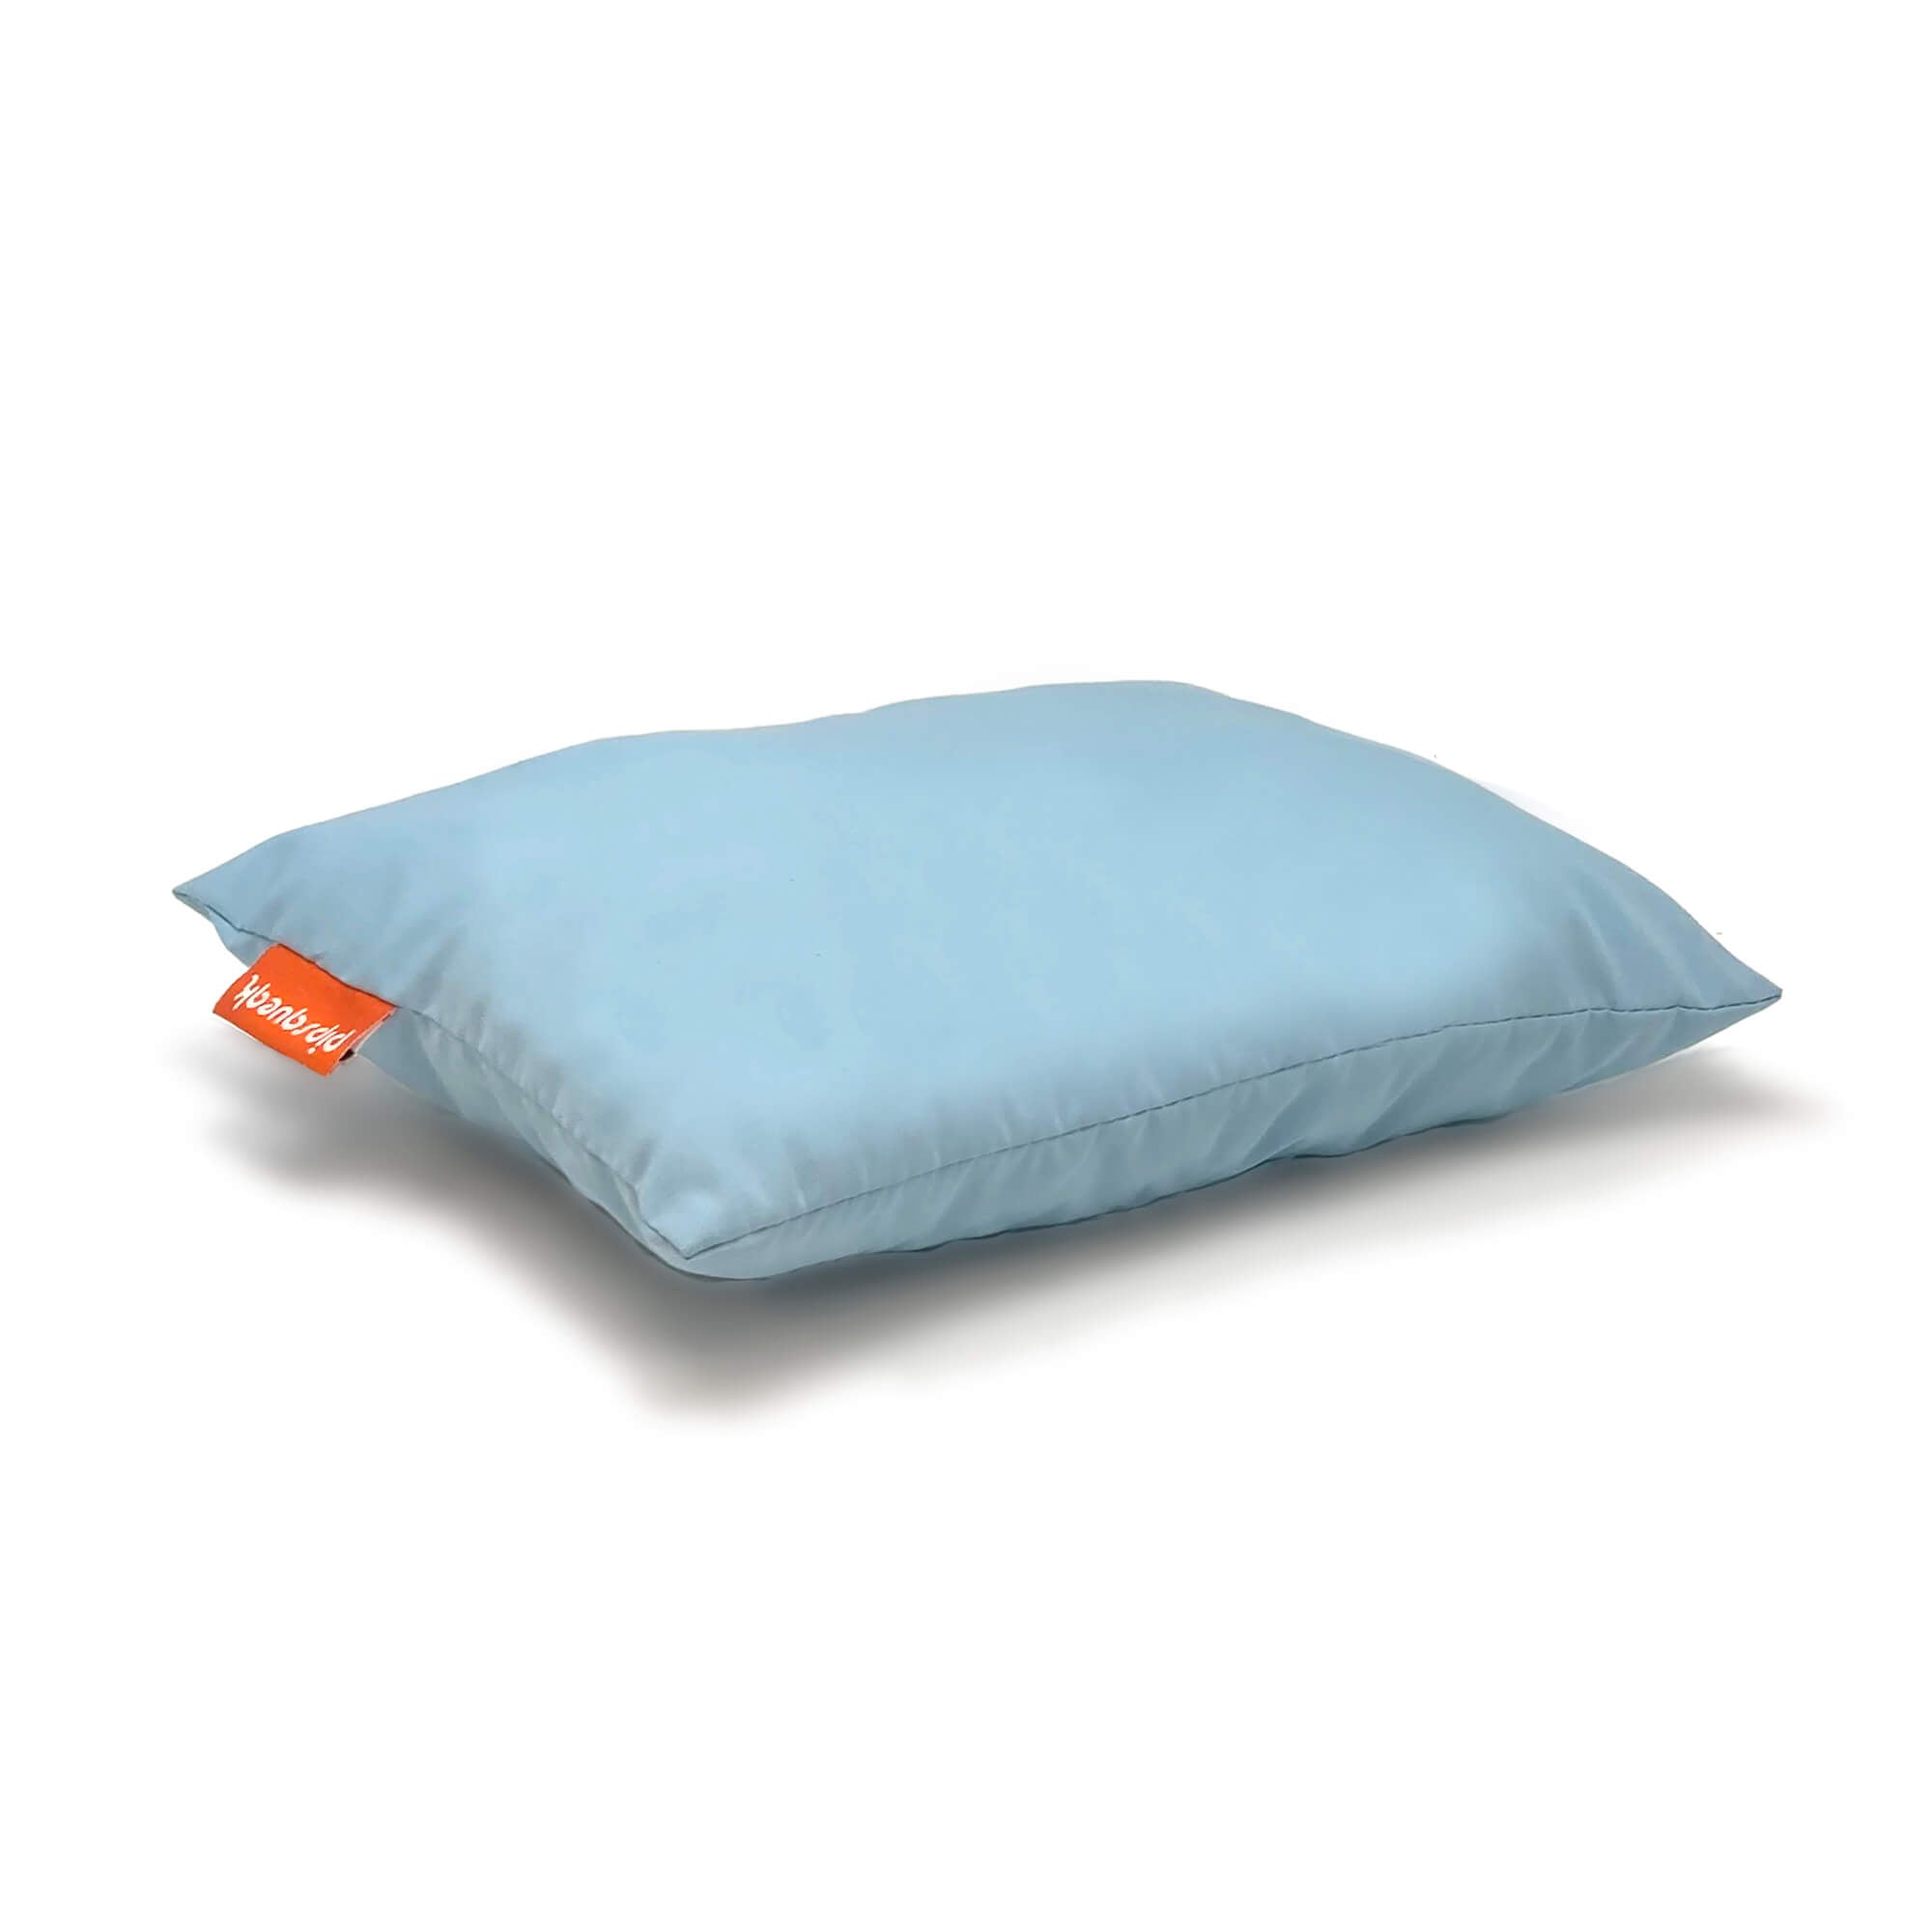 Urban Infant Pipsqueak Tiny Pillow and Pillowcase Set - Small Mini 11A x 7A x 25A - Machine Washable - Kids, Travel, Neck, Lumbar, Dogs, Preschool - W